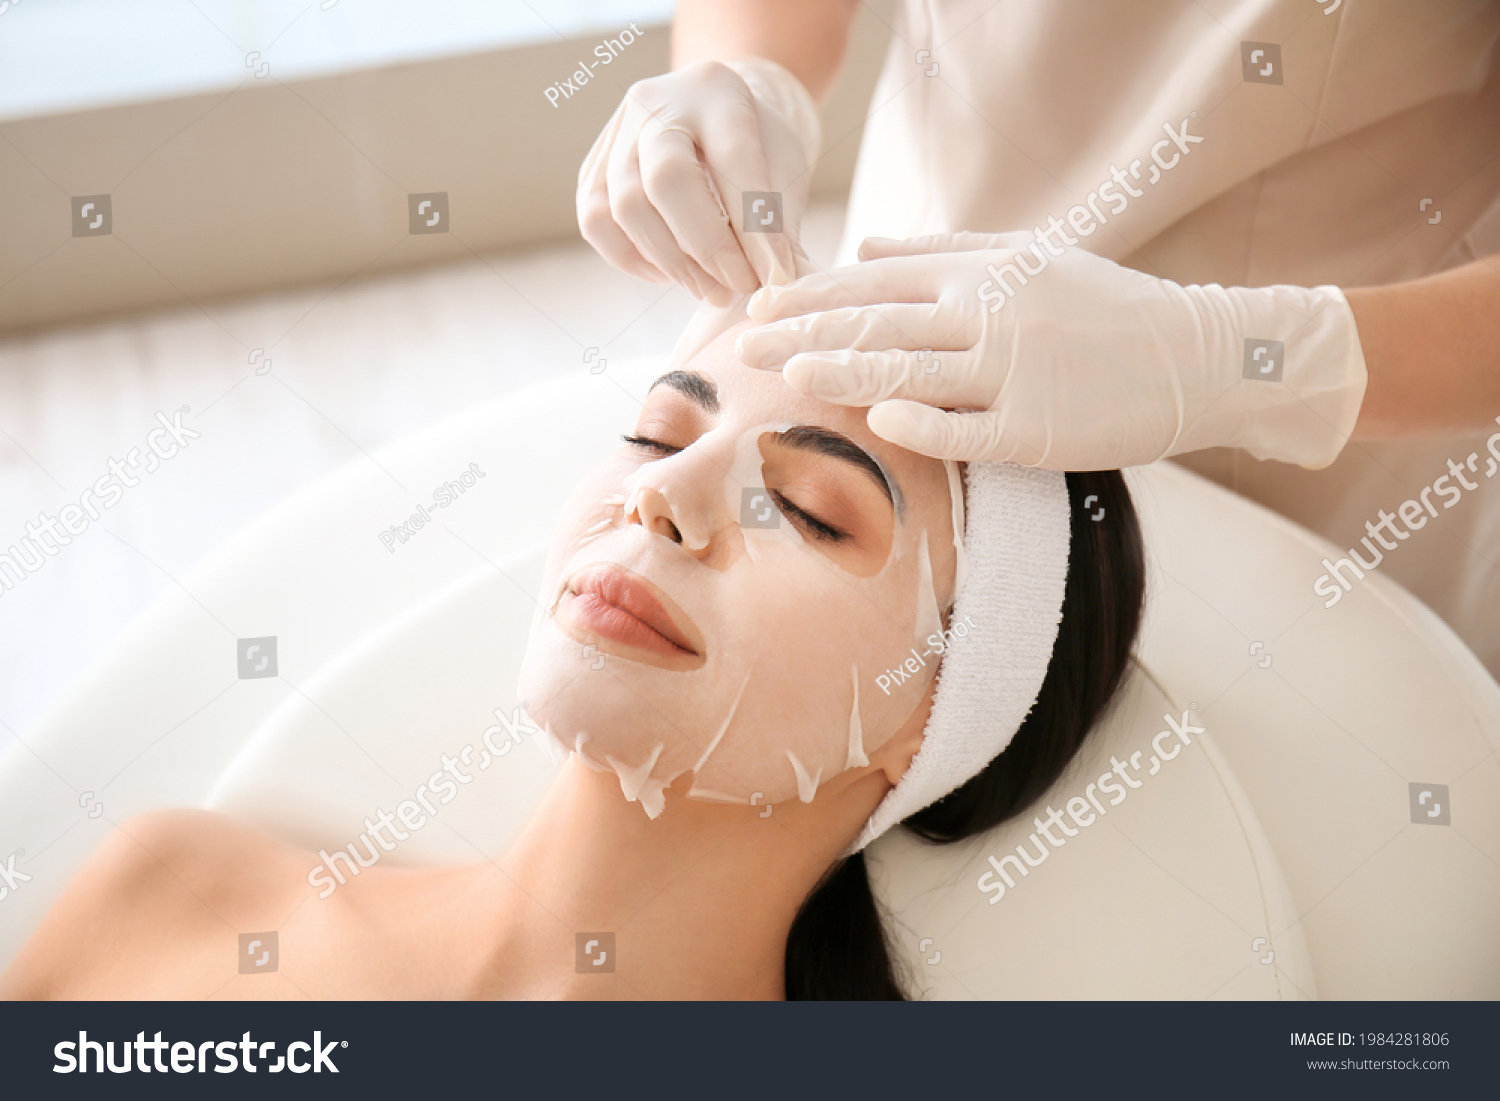 Cosmetologist applying sheet mask on woman's face in beauty salon #1984281806